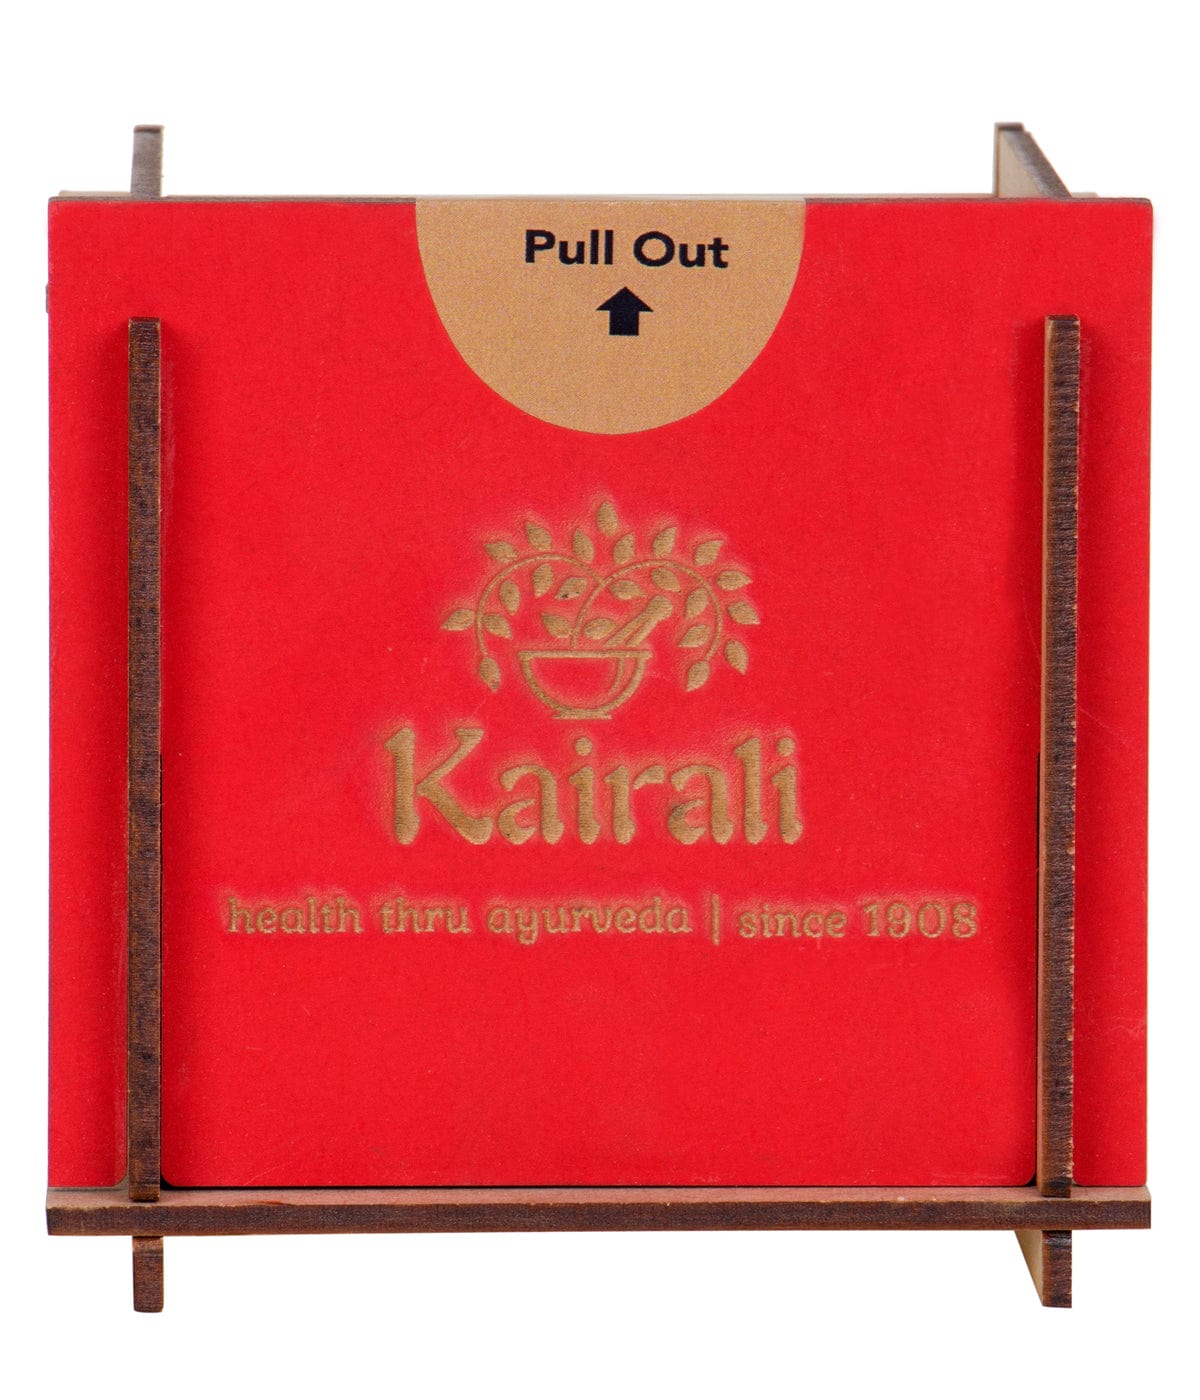 Kairali Ayurveda Group Kairali Taahira - Herbal Infusion Tea for Healing & Detoxification (100 grams)